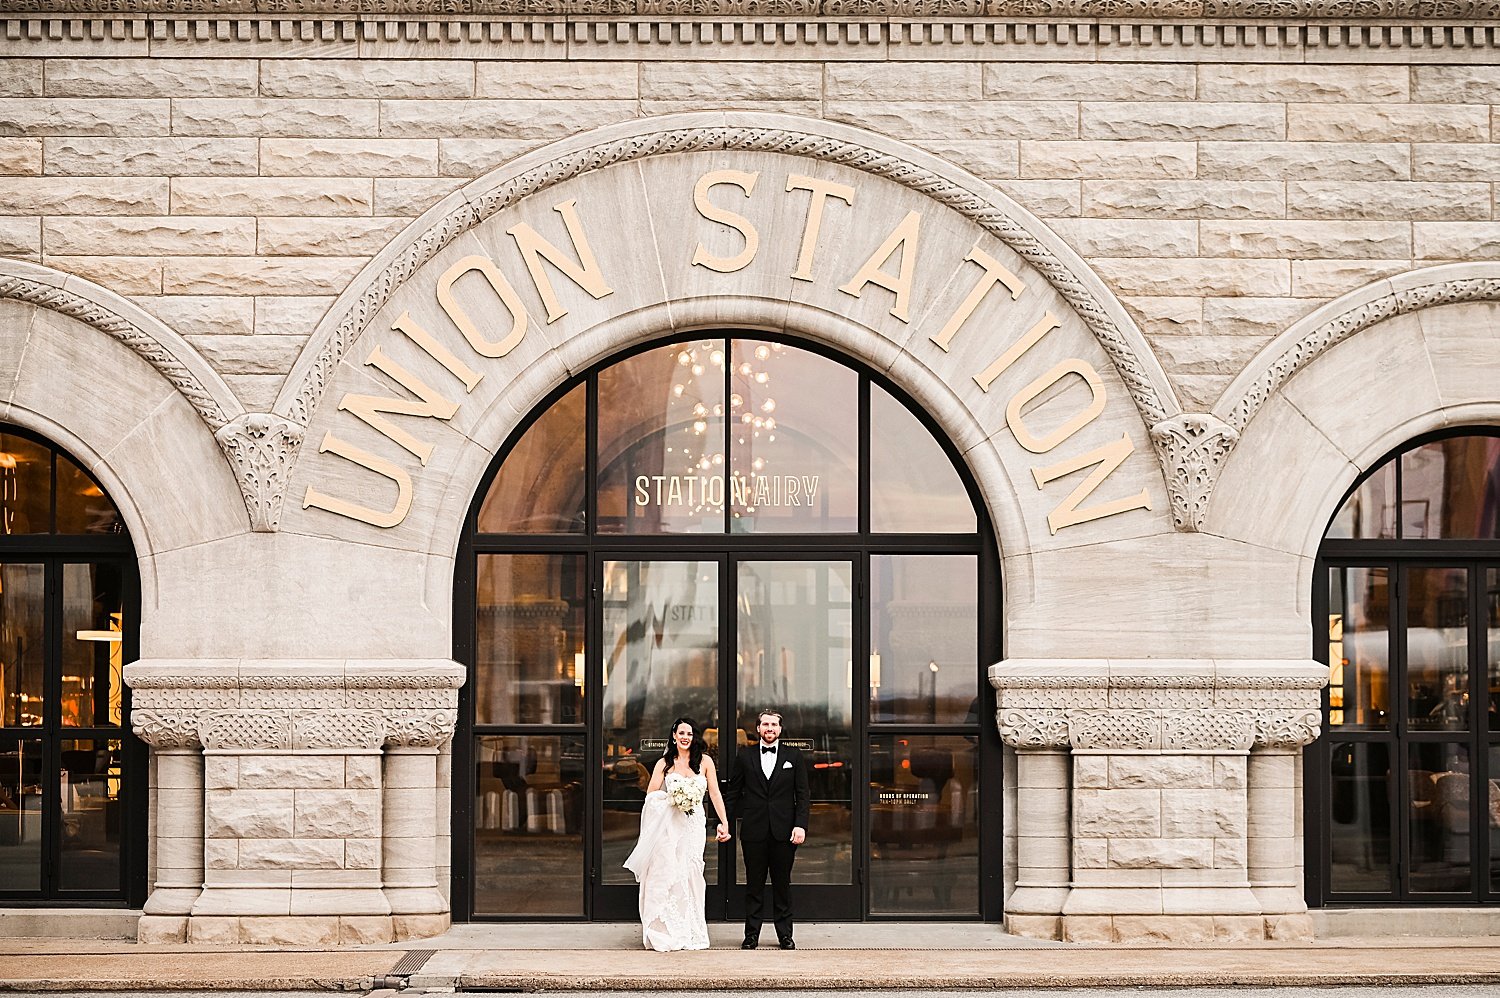 Union Station in Nashville, TN